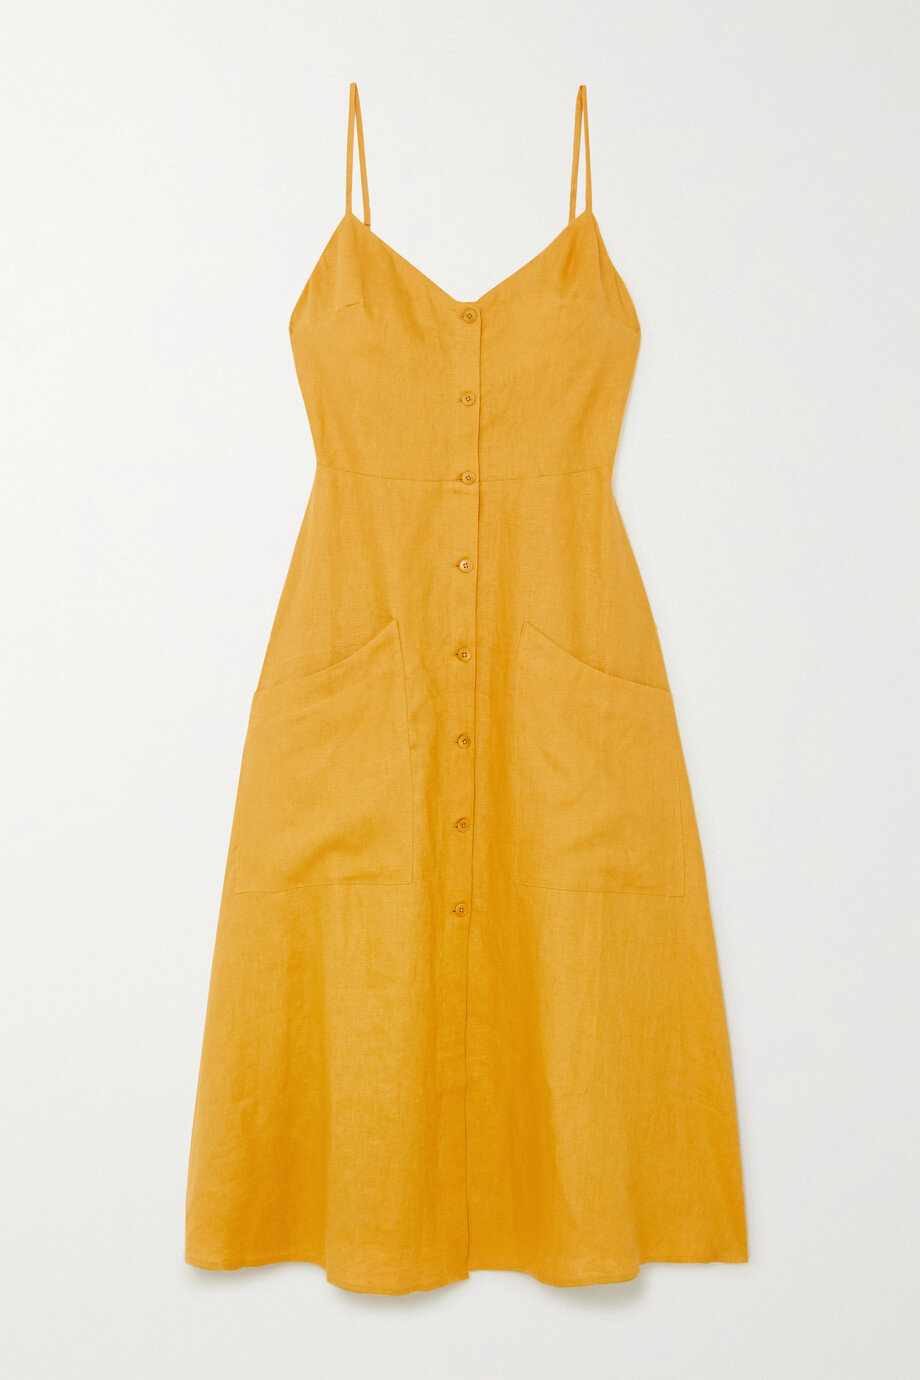 Dress, £255, Reformation